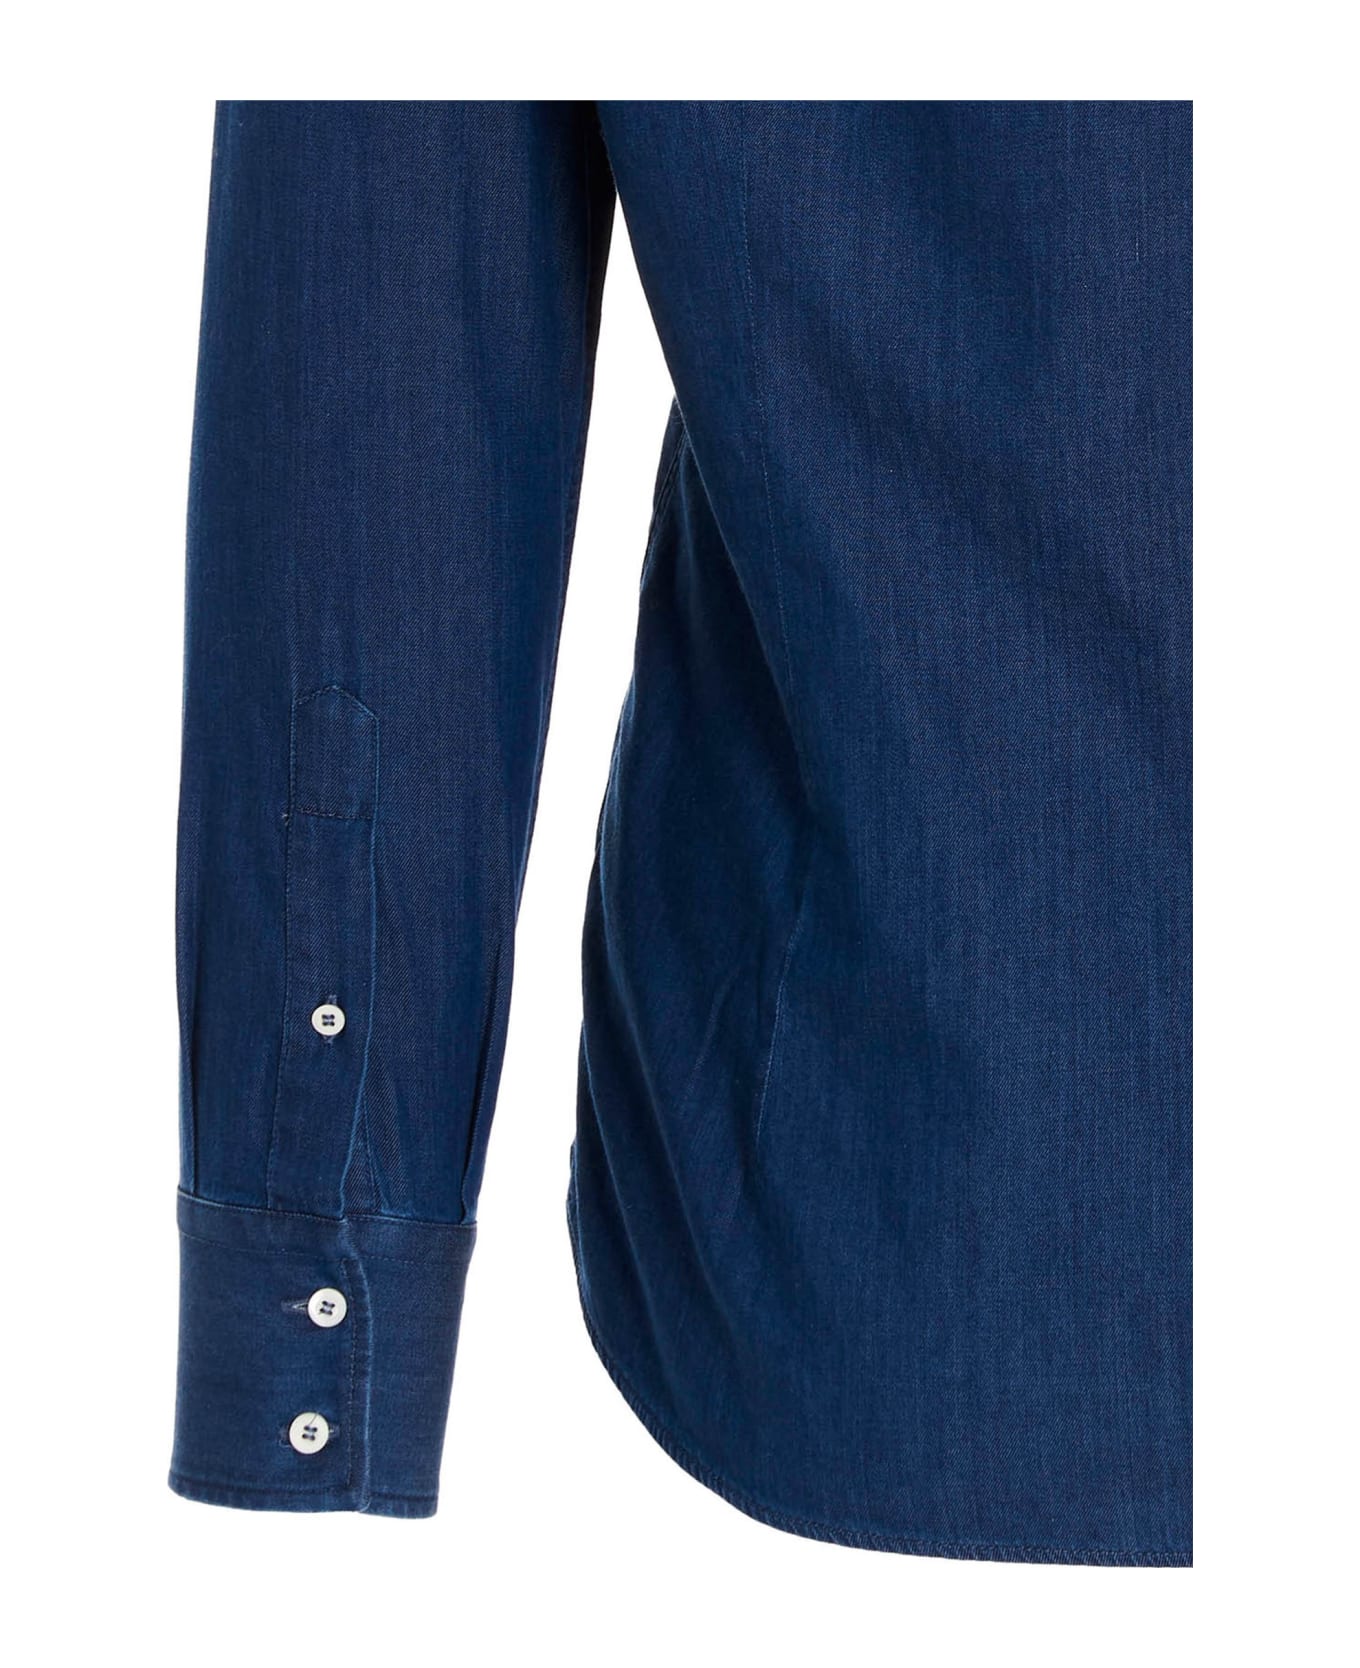 Brunello Cucinelli Long-sleeved Buttoned Shirt - Blue シャツ